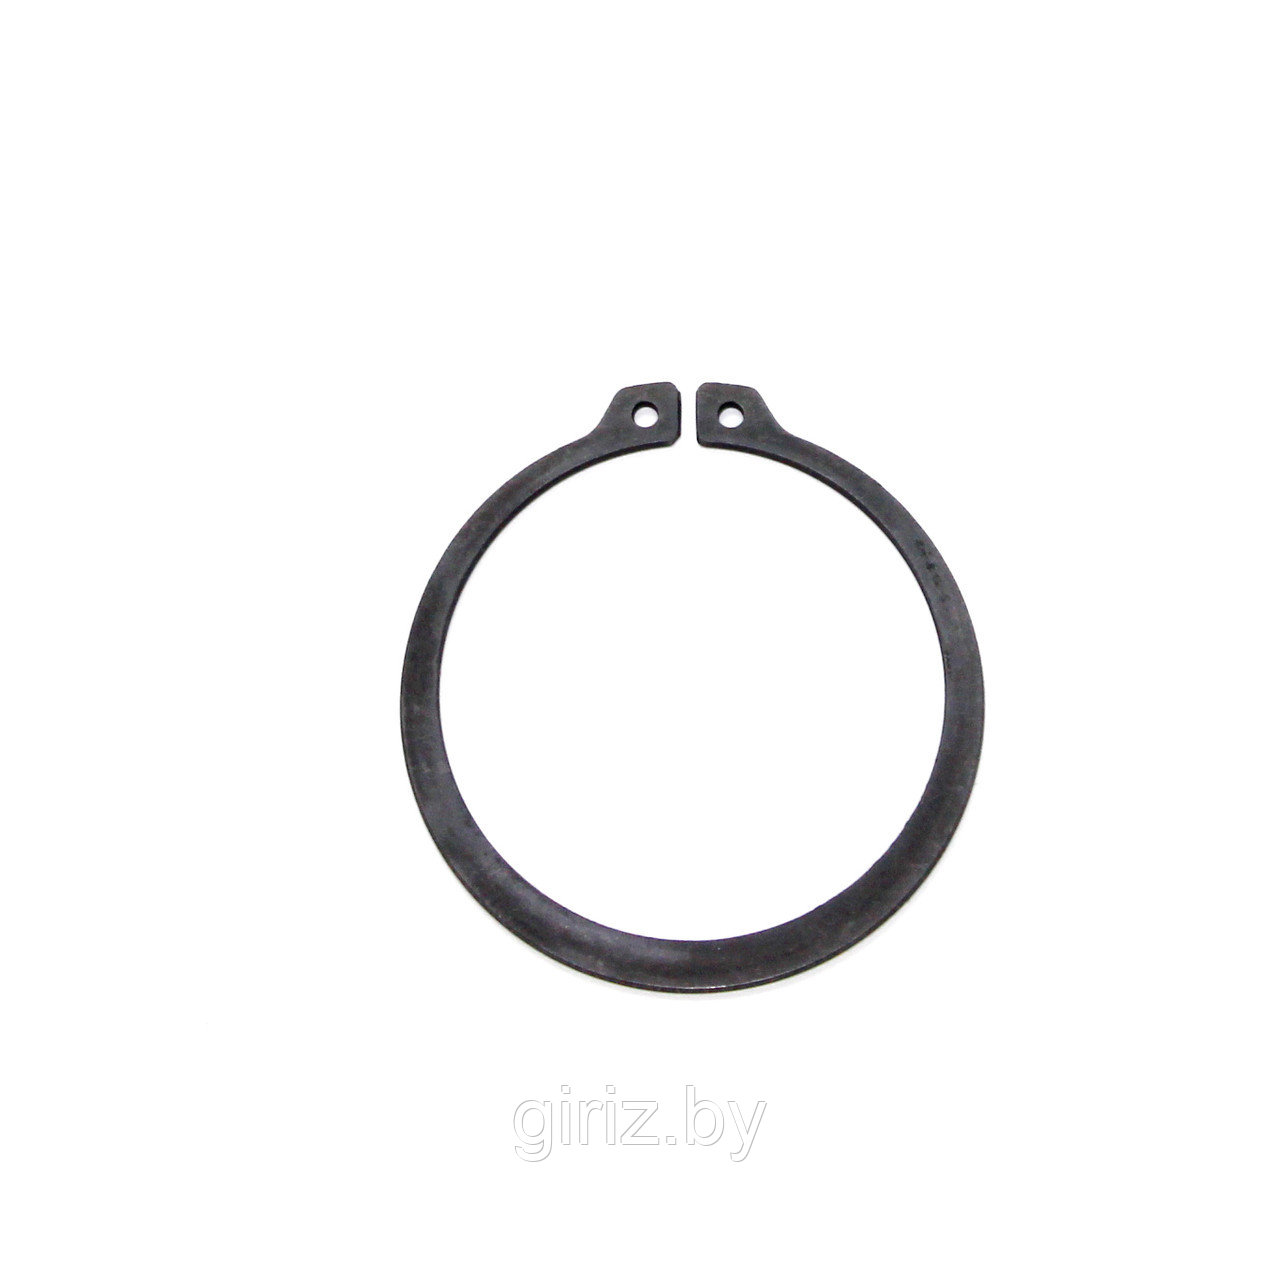 Стопорное кольцо ГОСТ 13942-86  155 мм (на вал, наружное, с ушками)